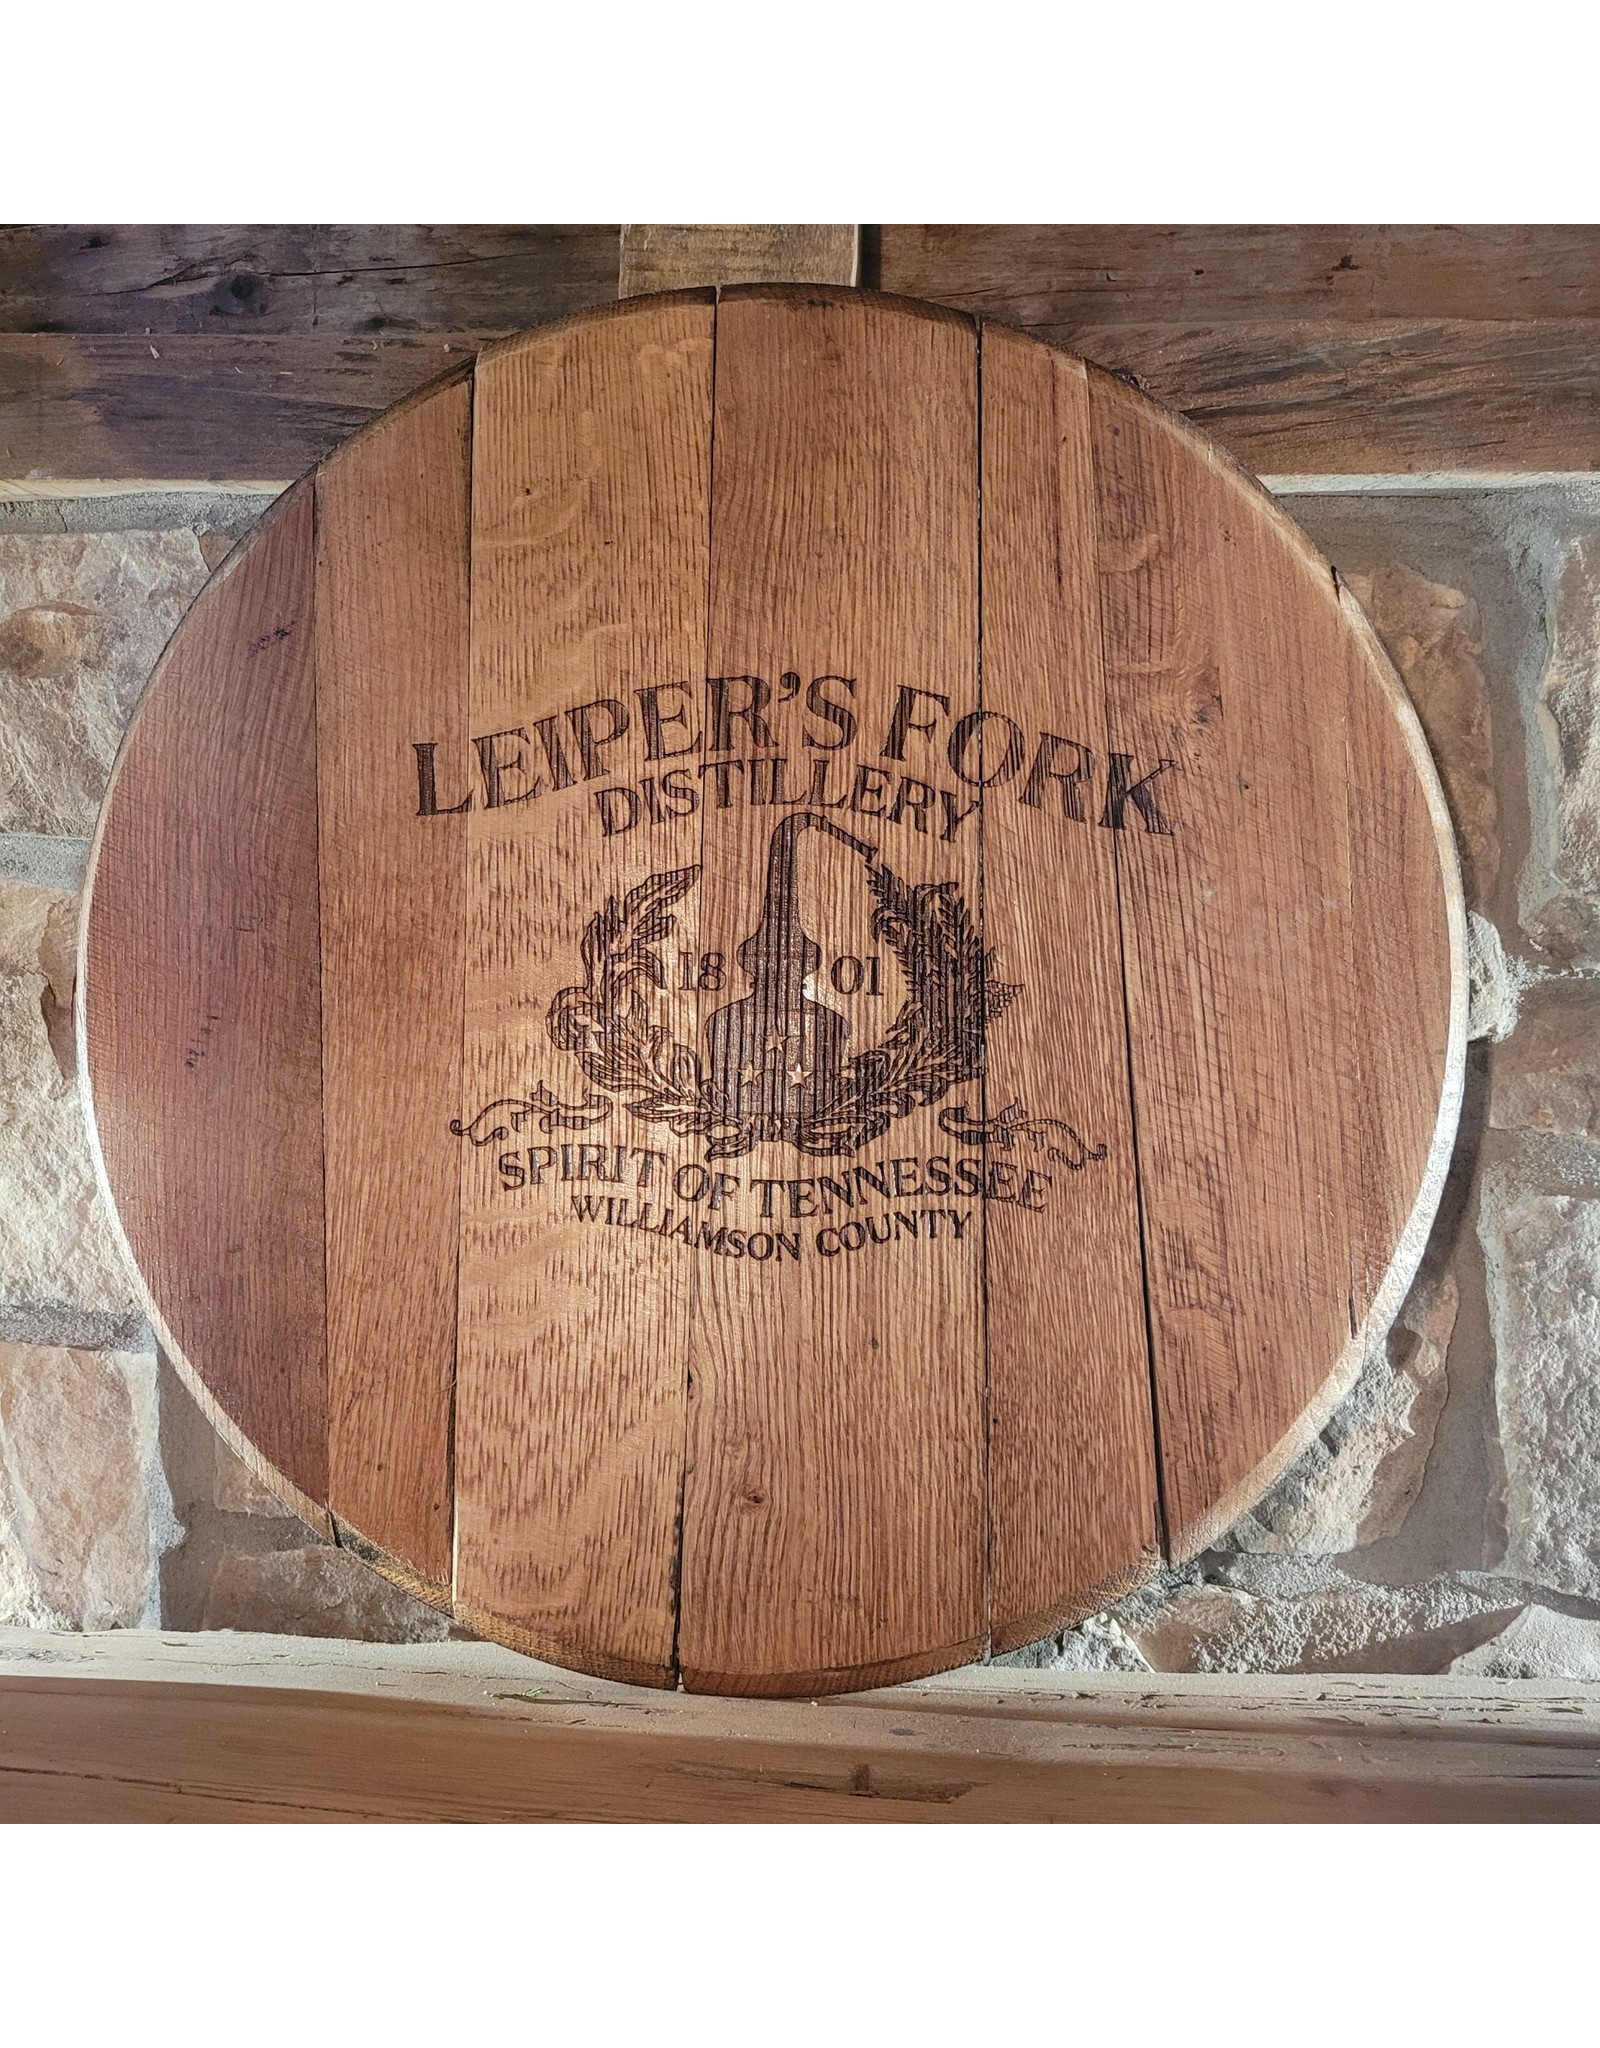 Leiper’s Fork Distillery LFD Engraved Barrel Head